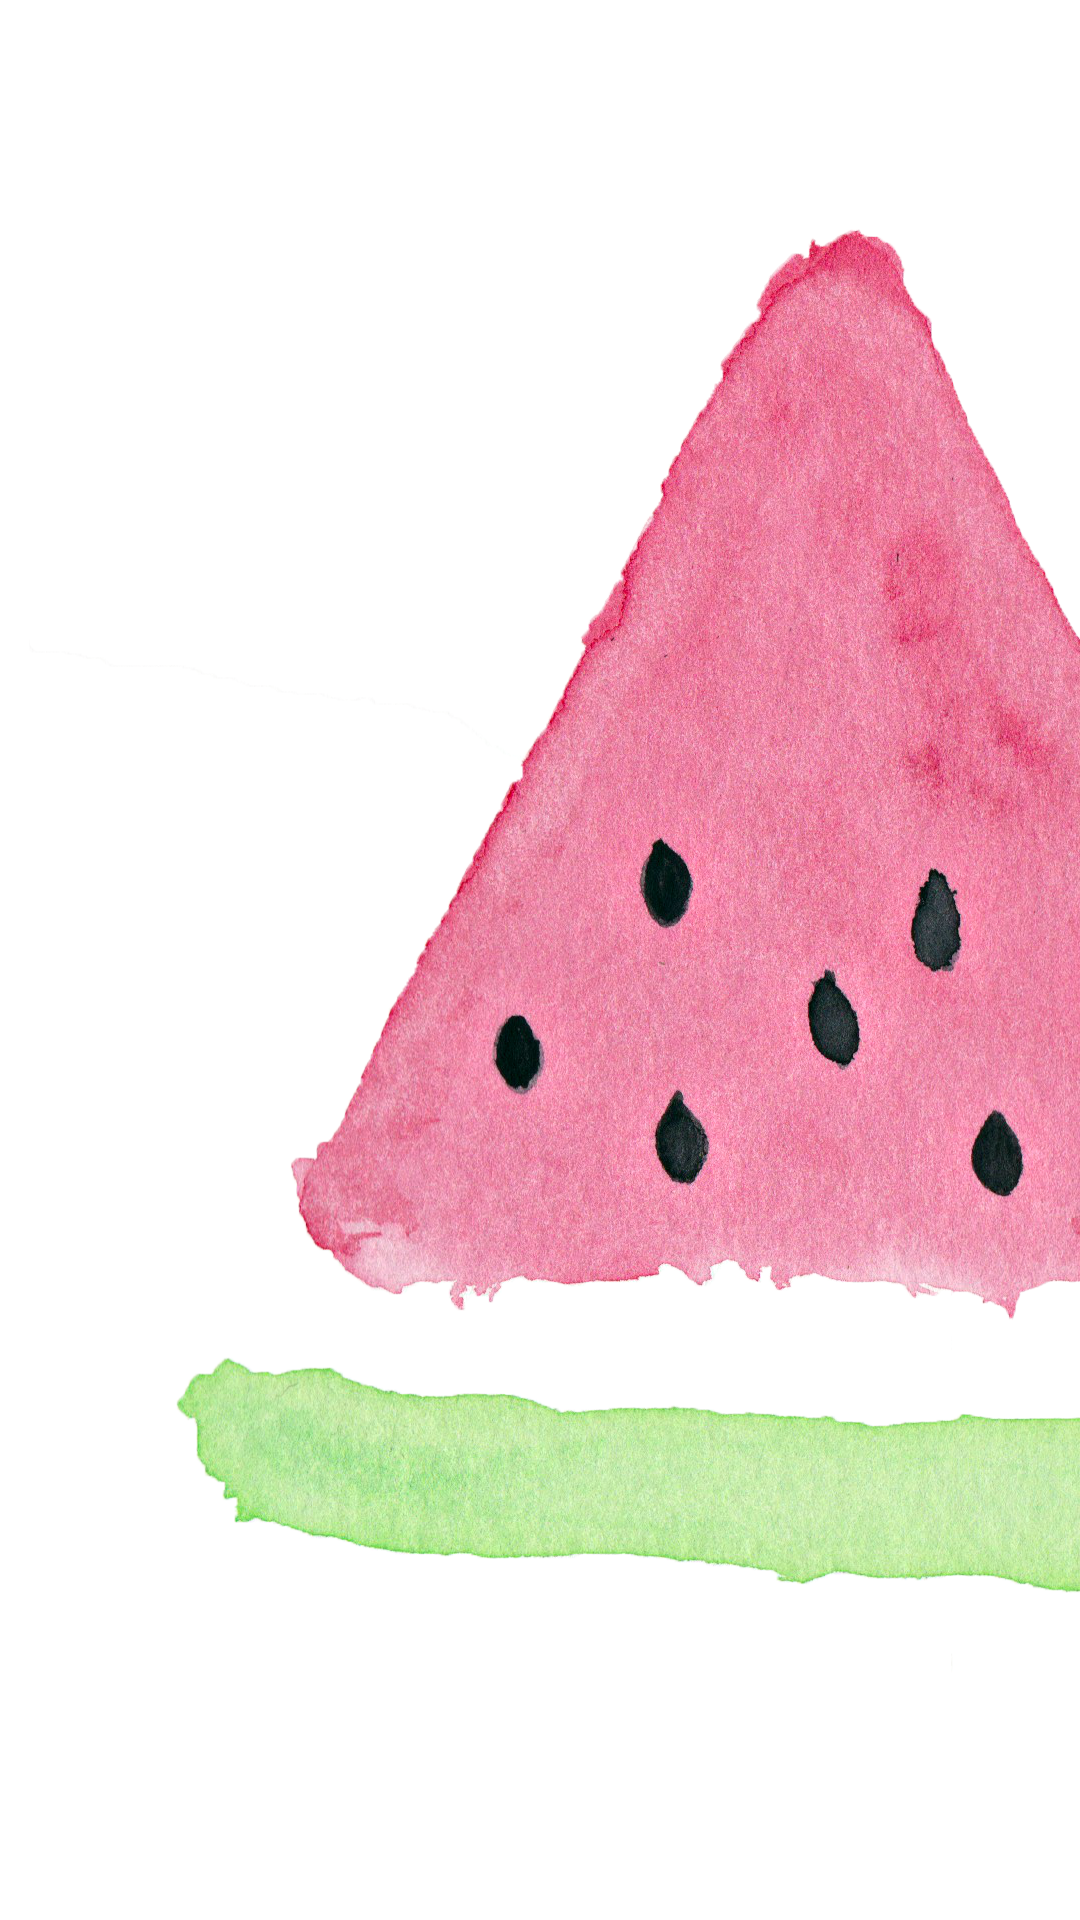 watermelon wallpaper iphone,melon,watermelon,pink,citrullus,fruit